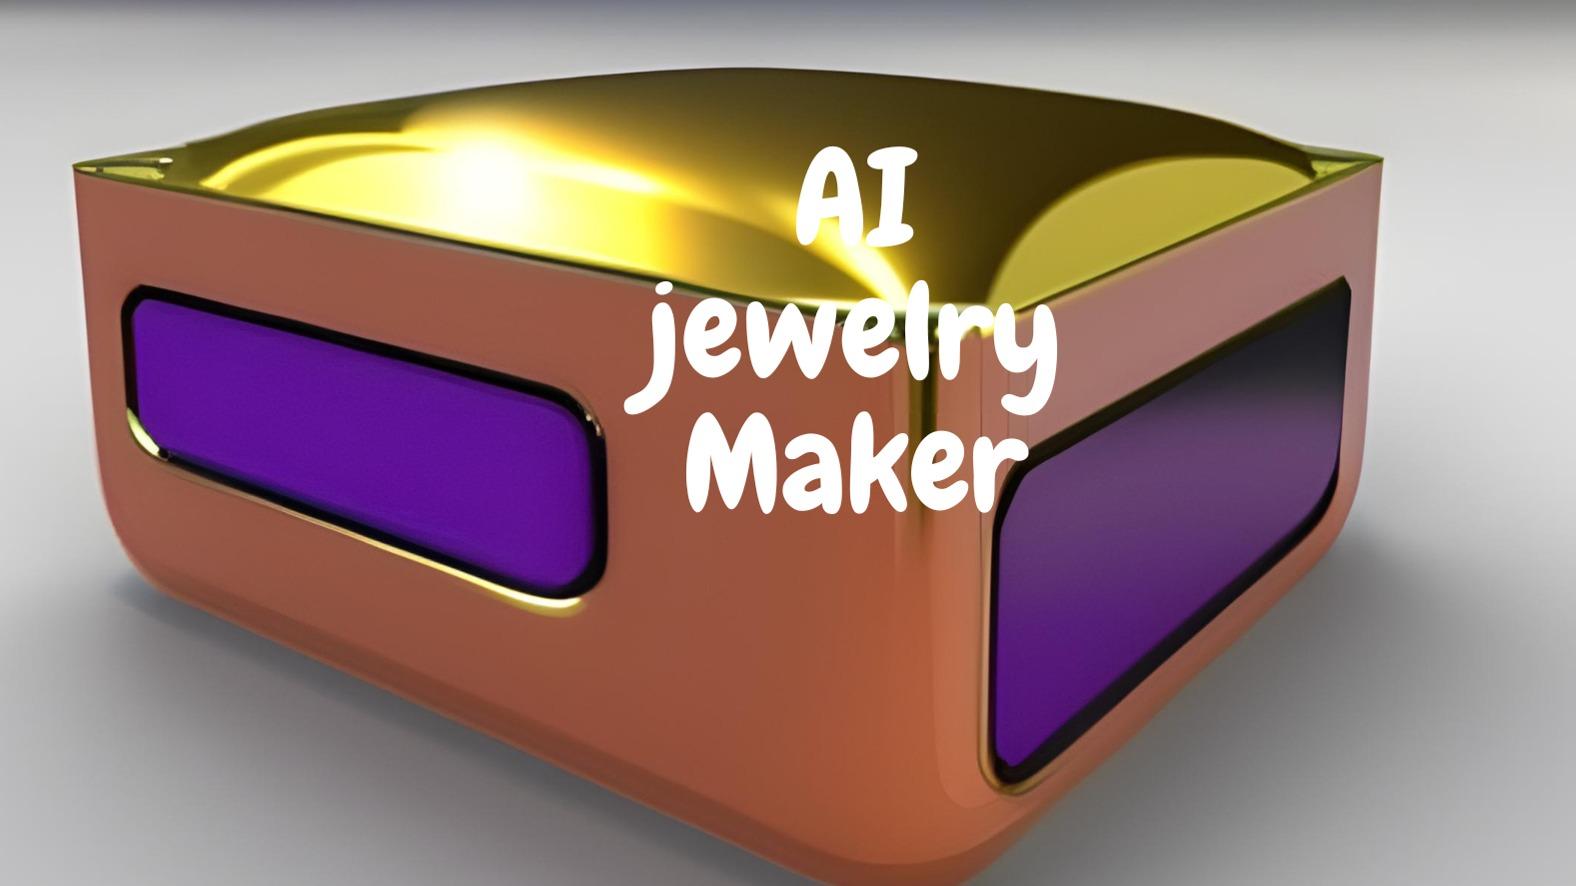 AI jewelry maker